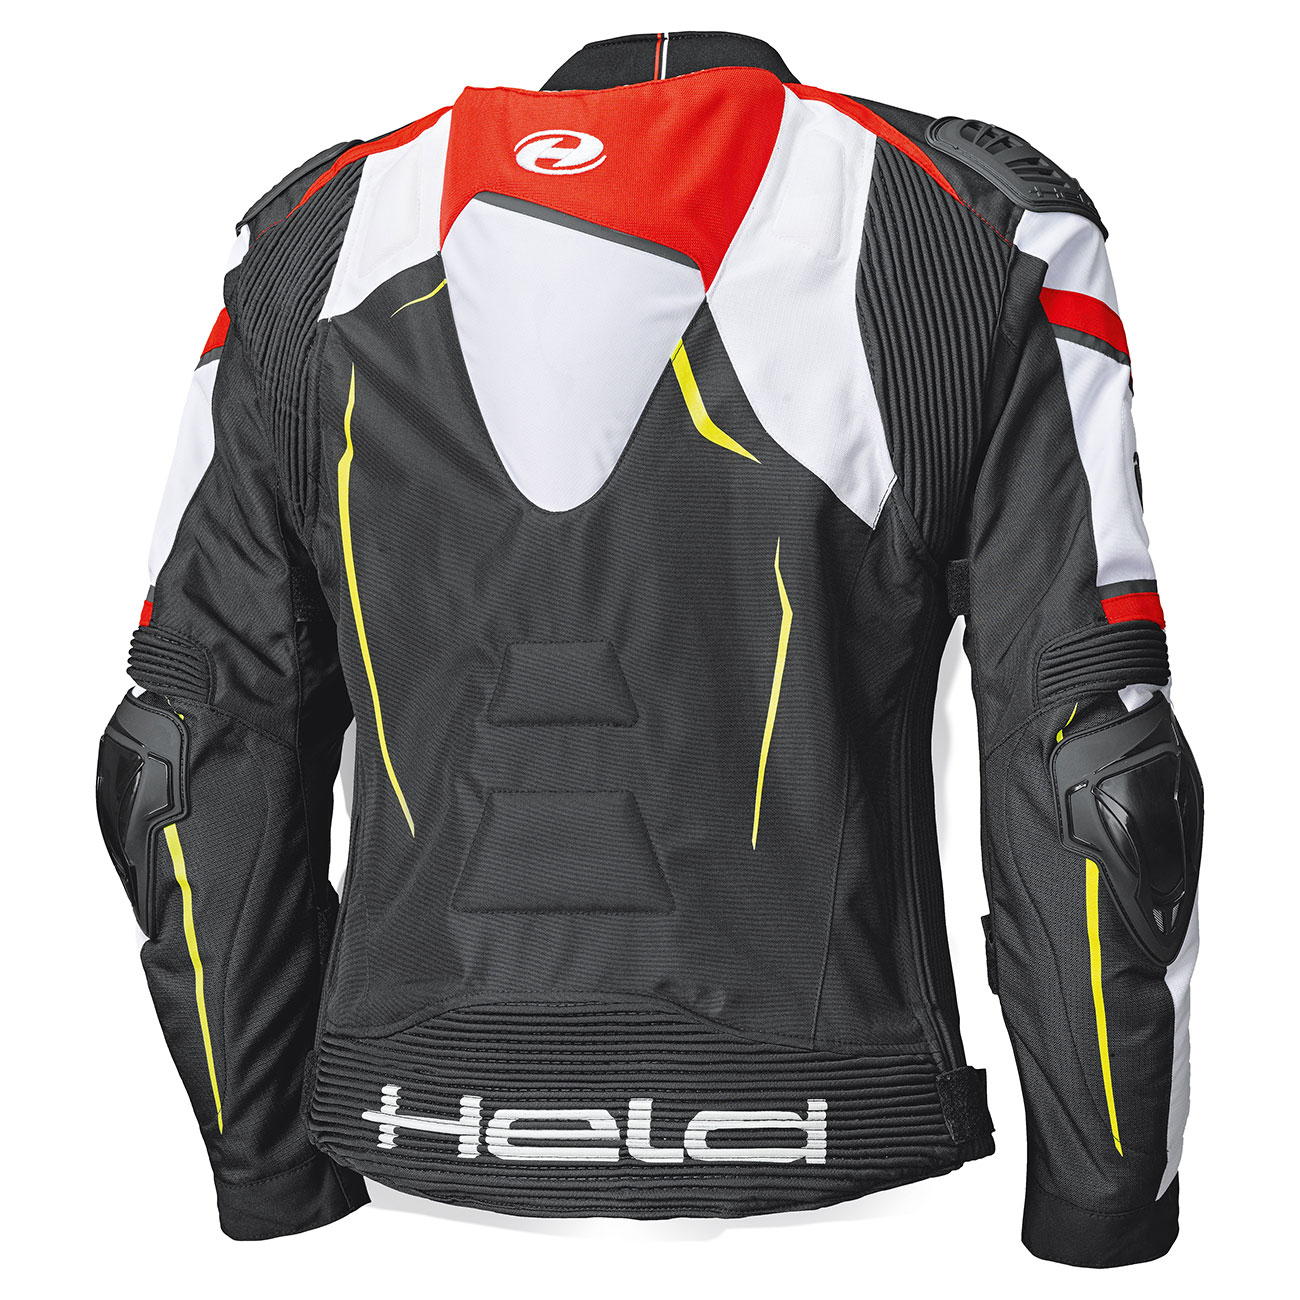 Safer SRX Sport jacket